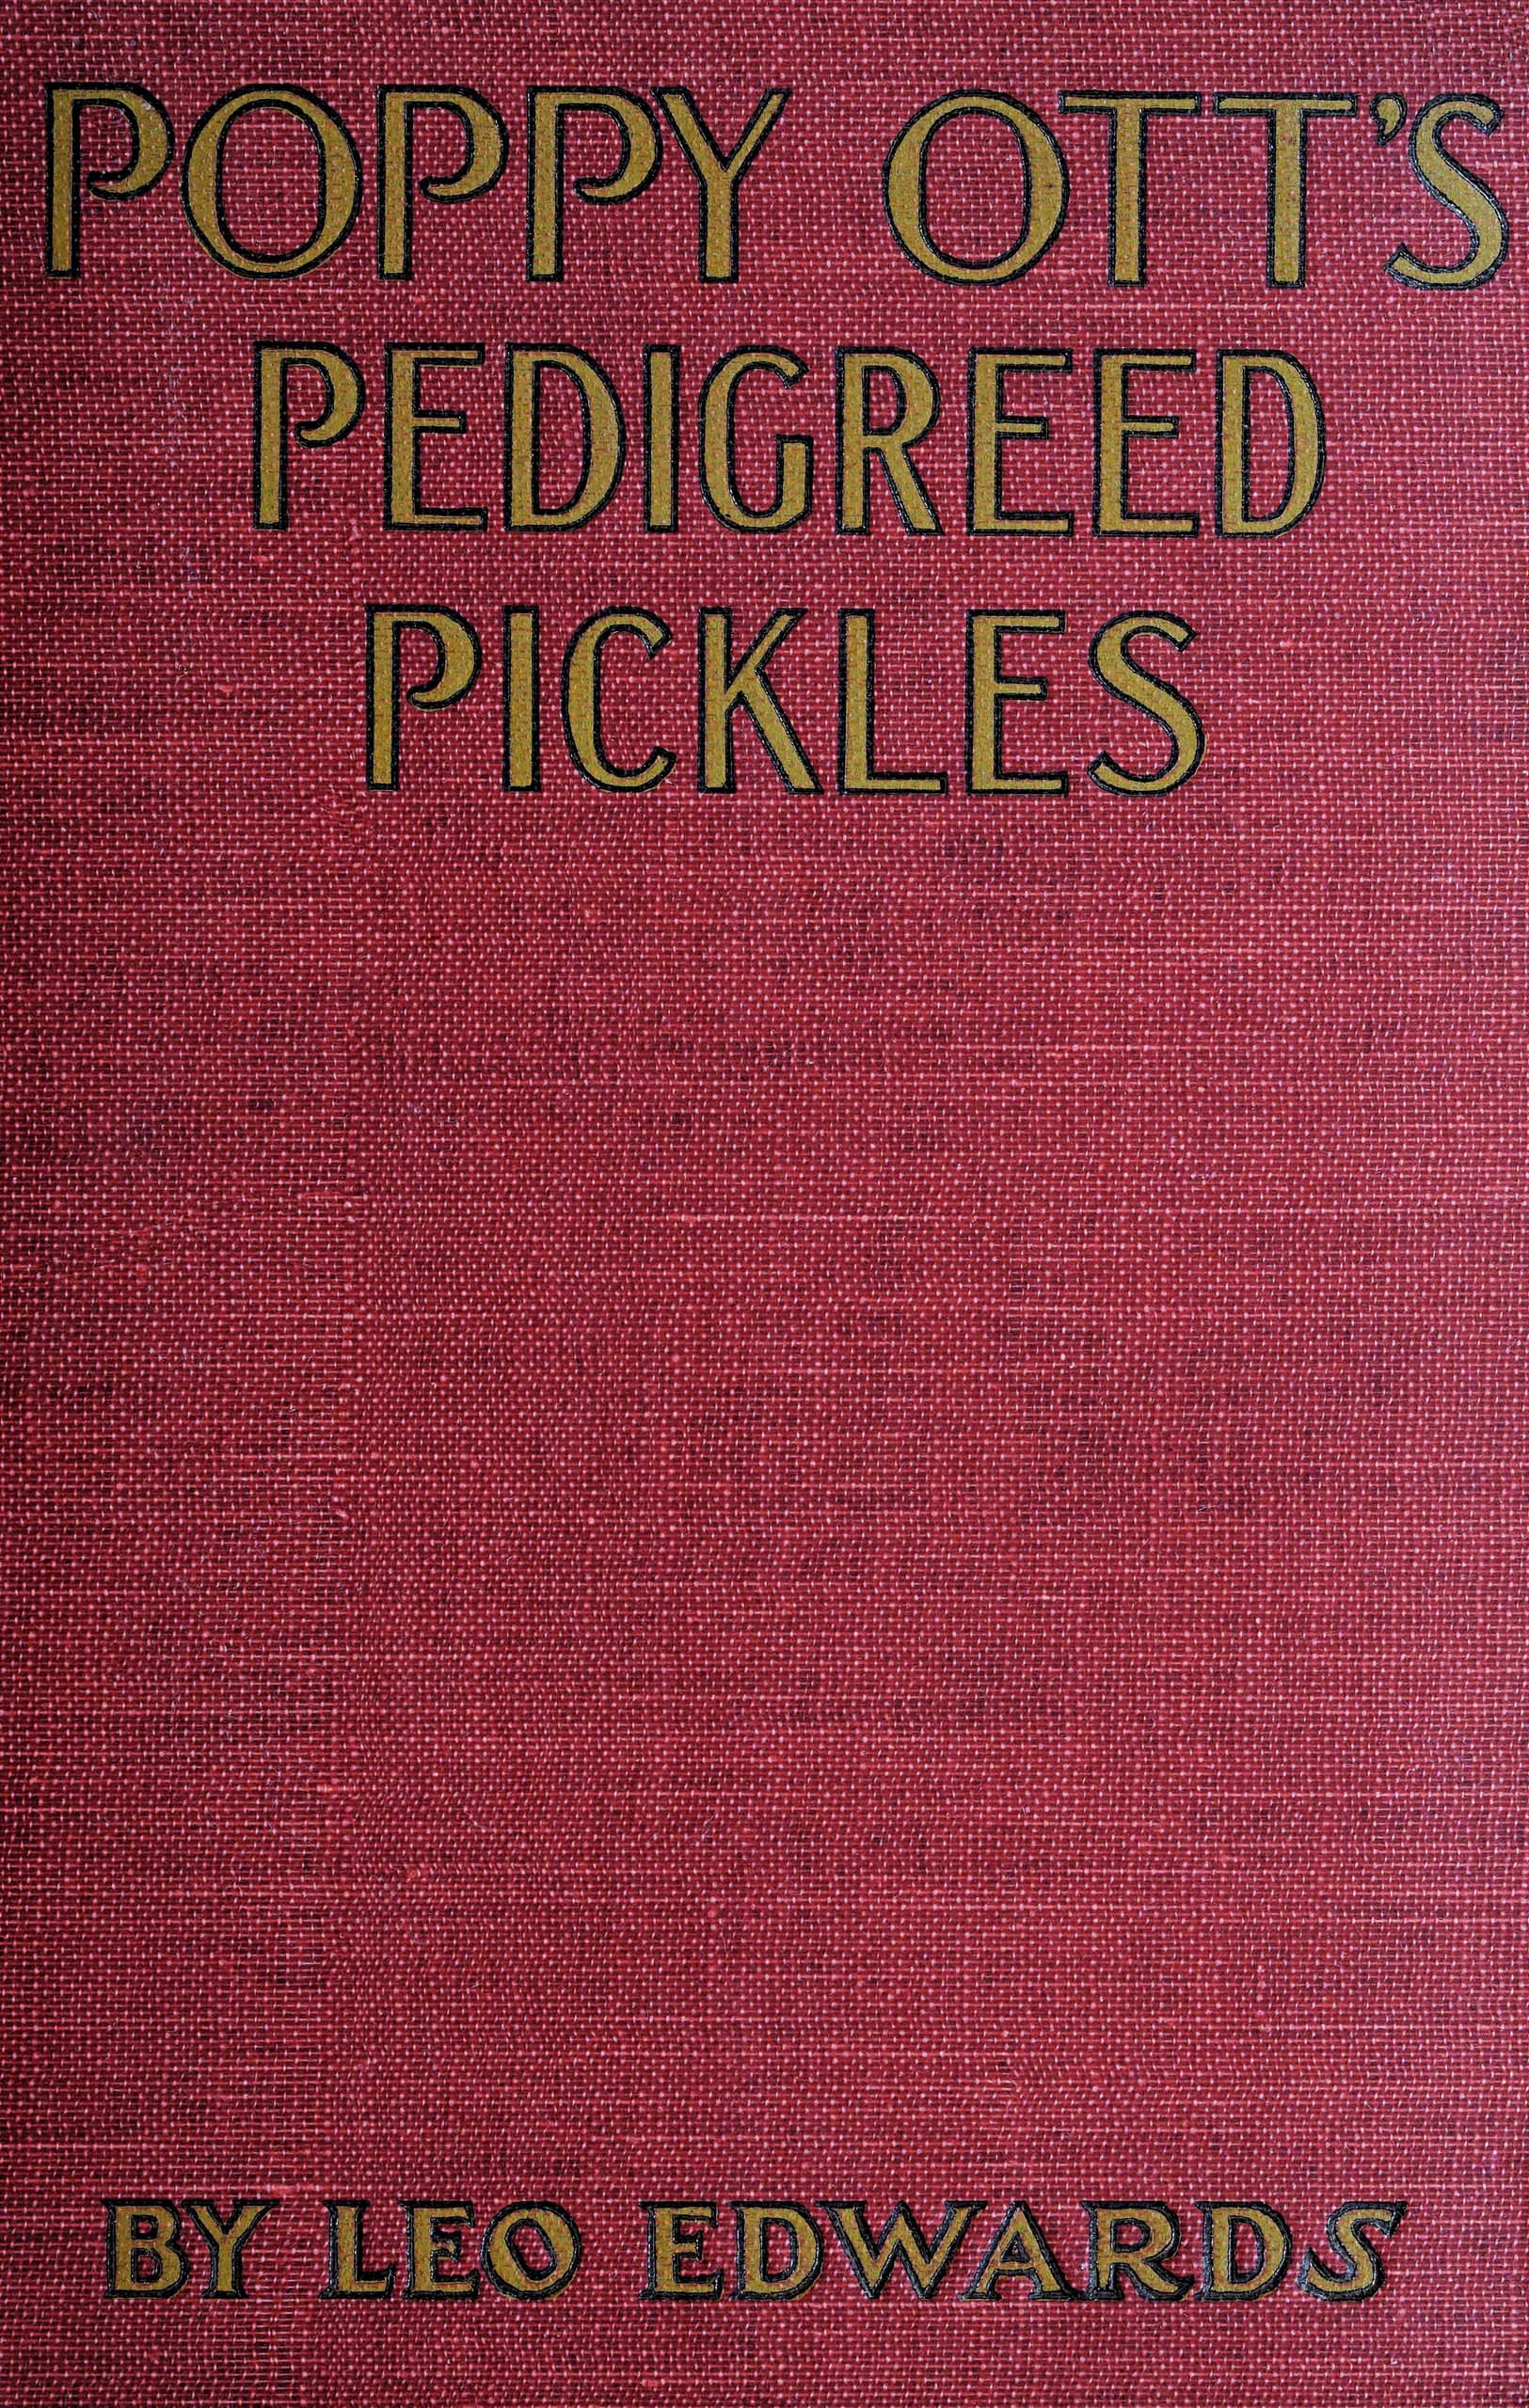 Poppy Ott's pedigreed pickles